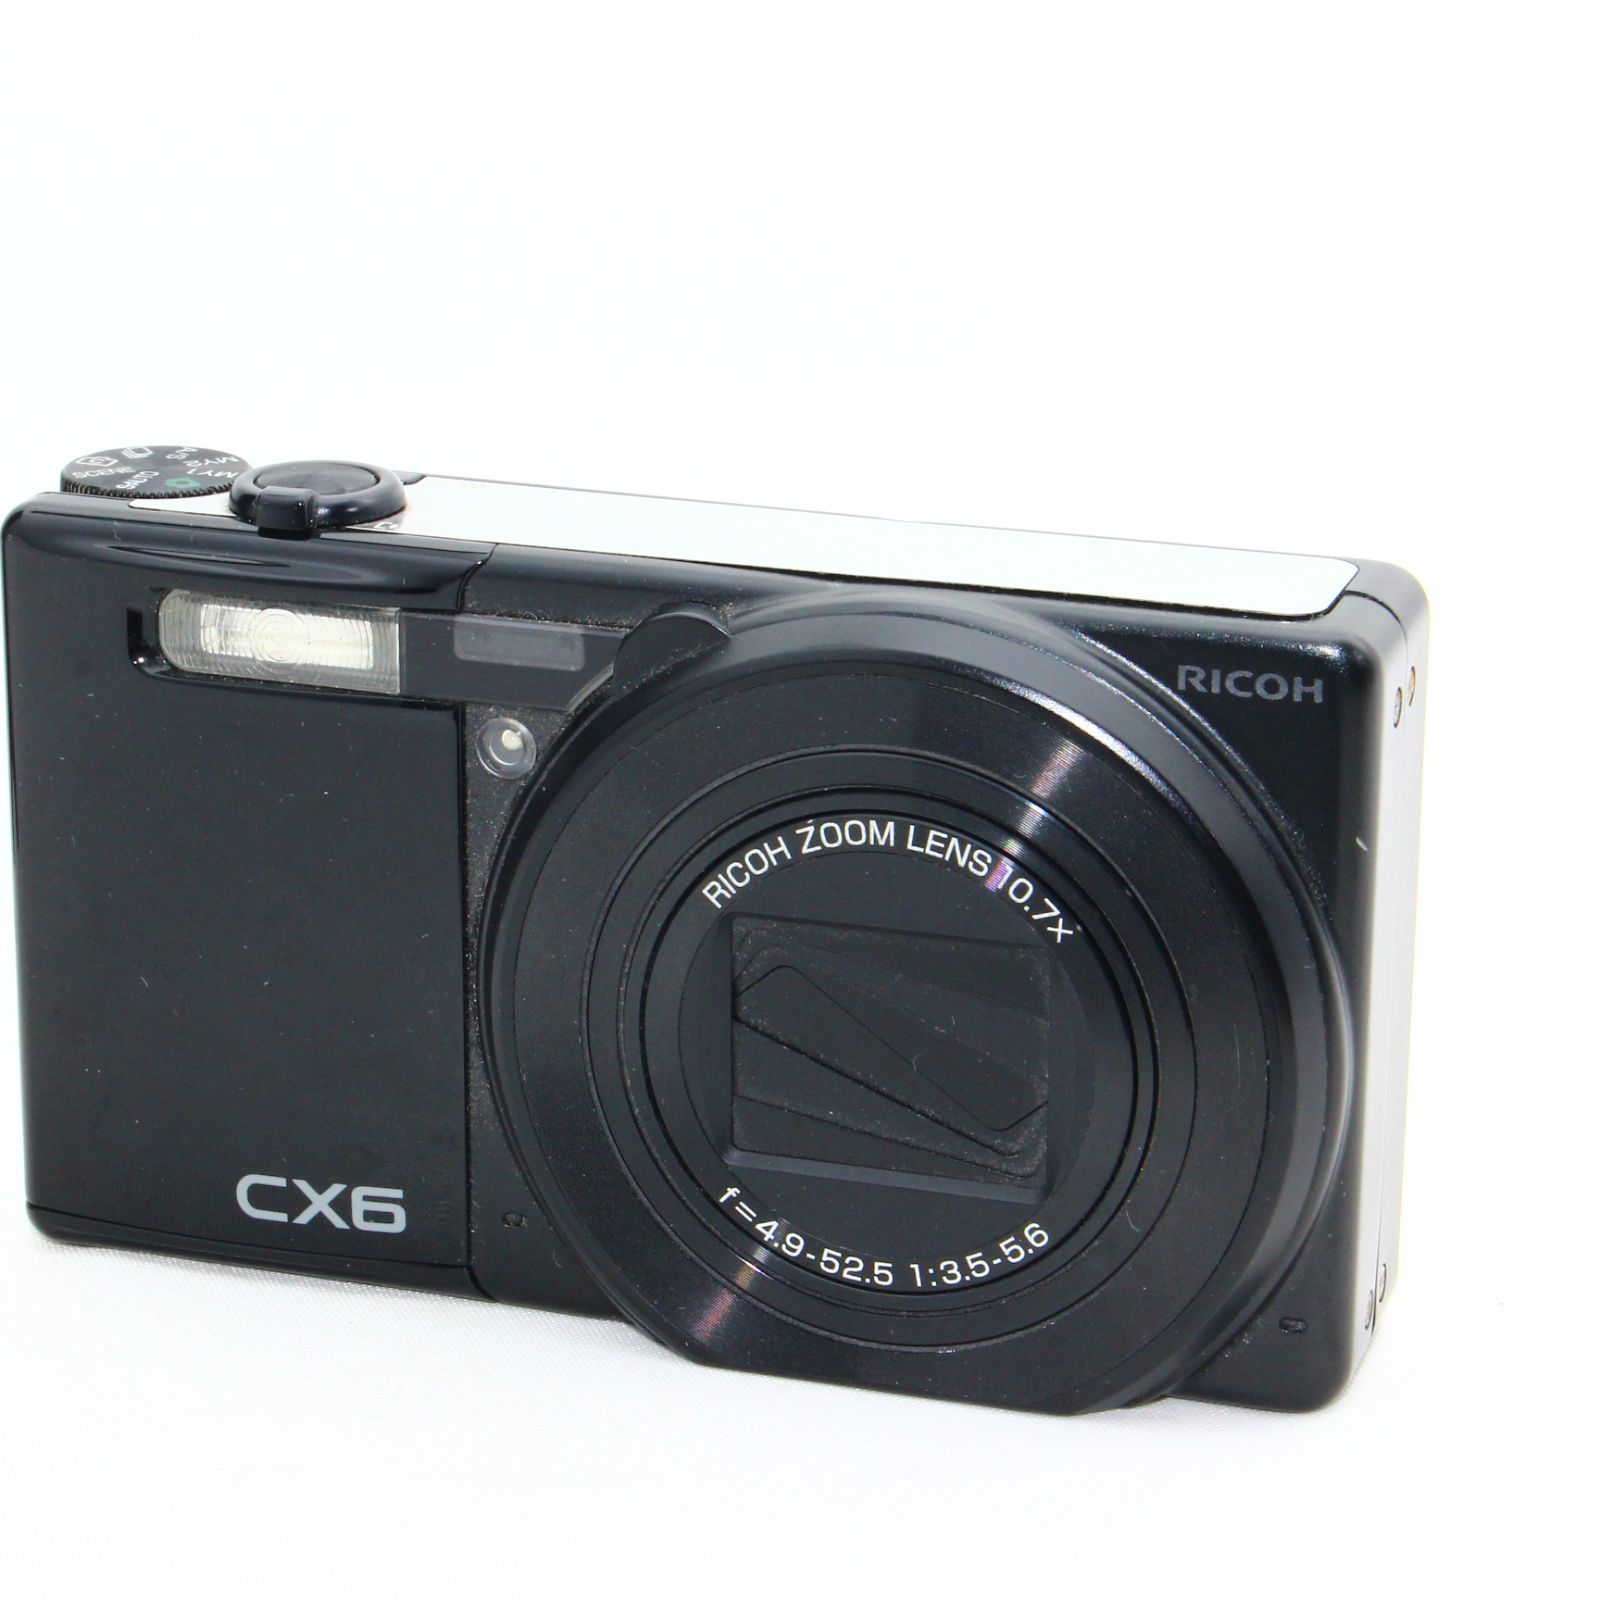 RICOH デジタルカメラ CX6ブラック CX6-BK MT Camera【中古保証1ヶ月】 メルカリ